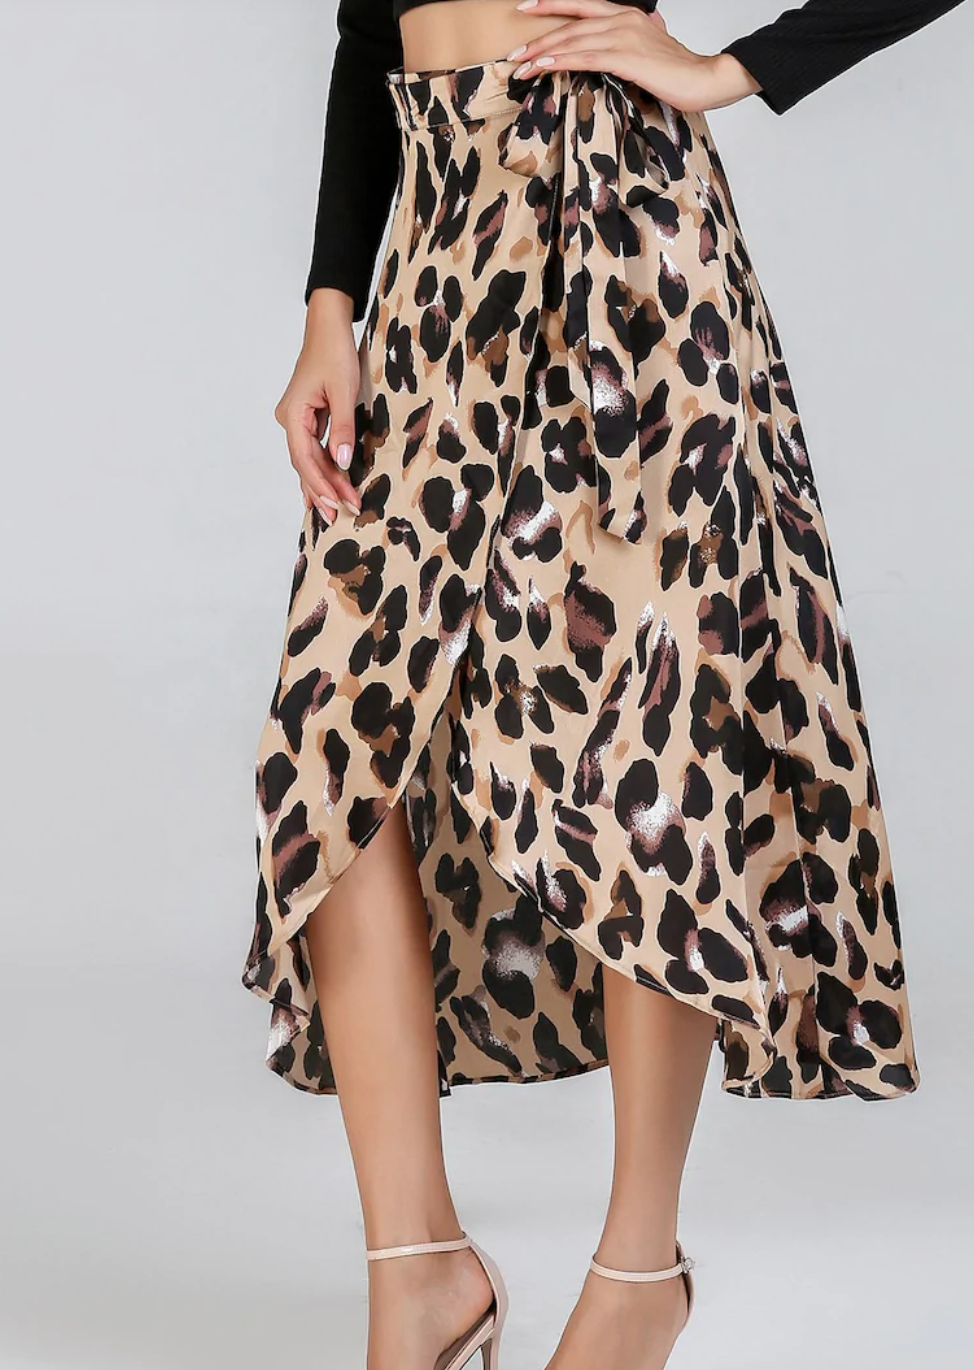 leopard wrap skirt 90s